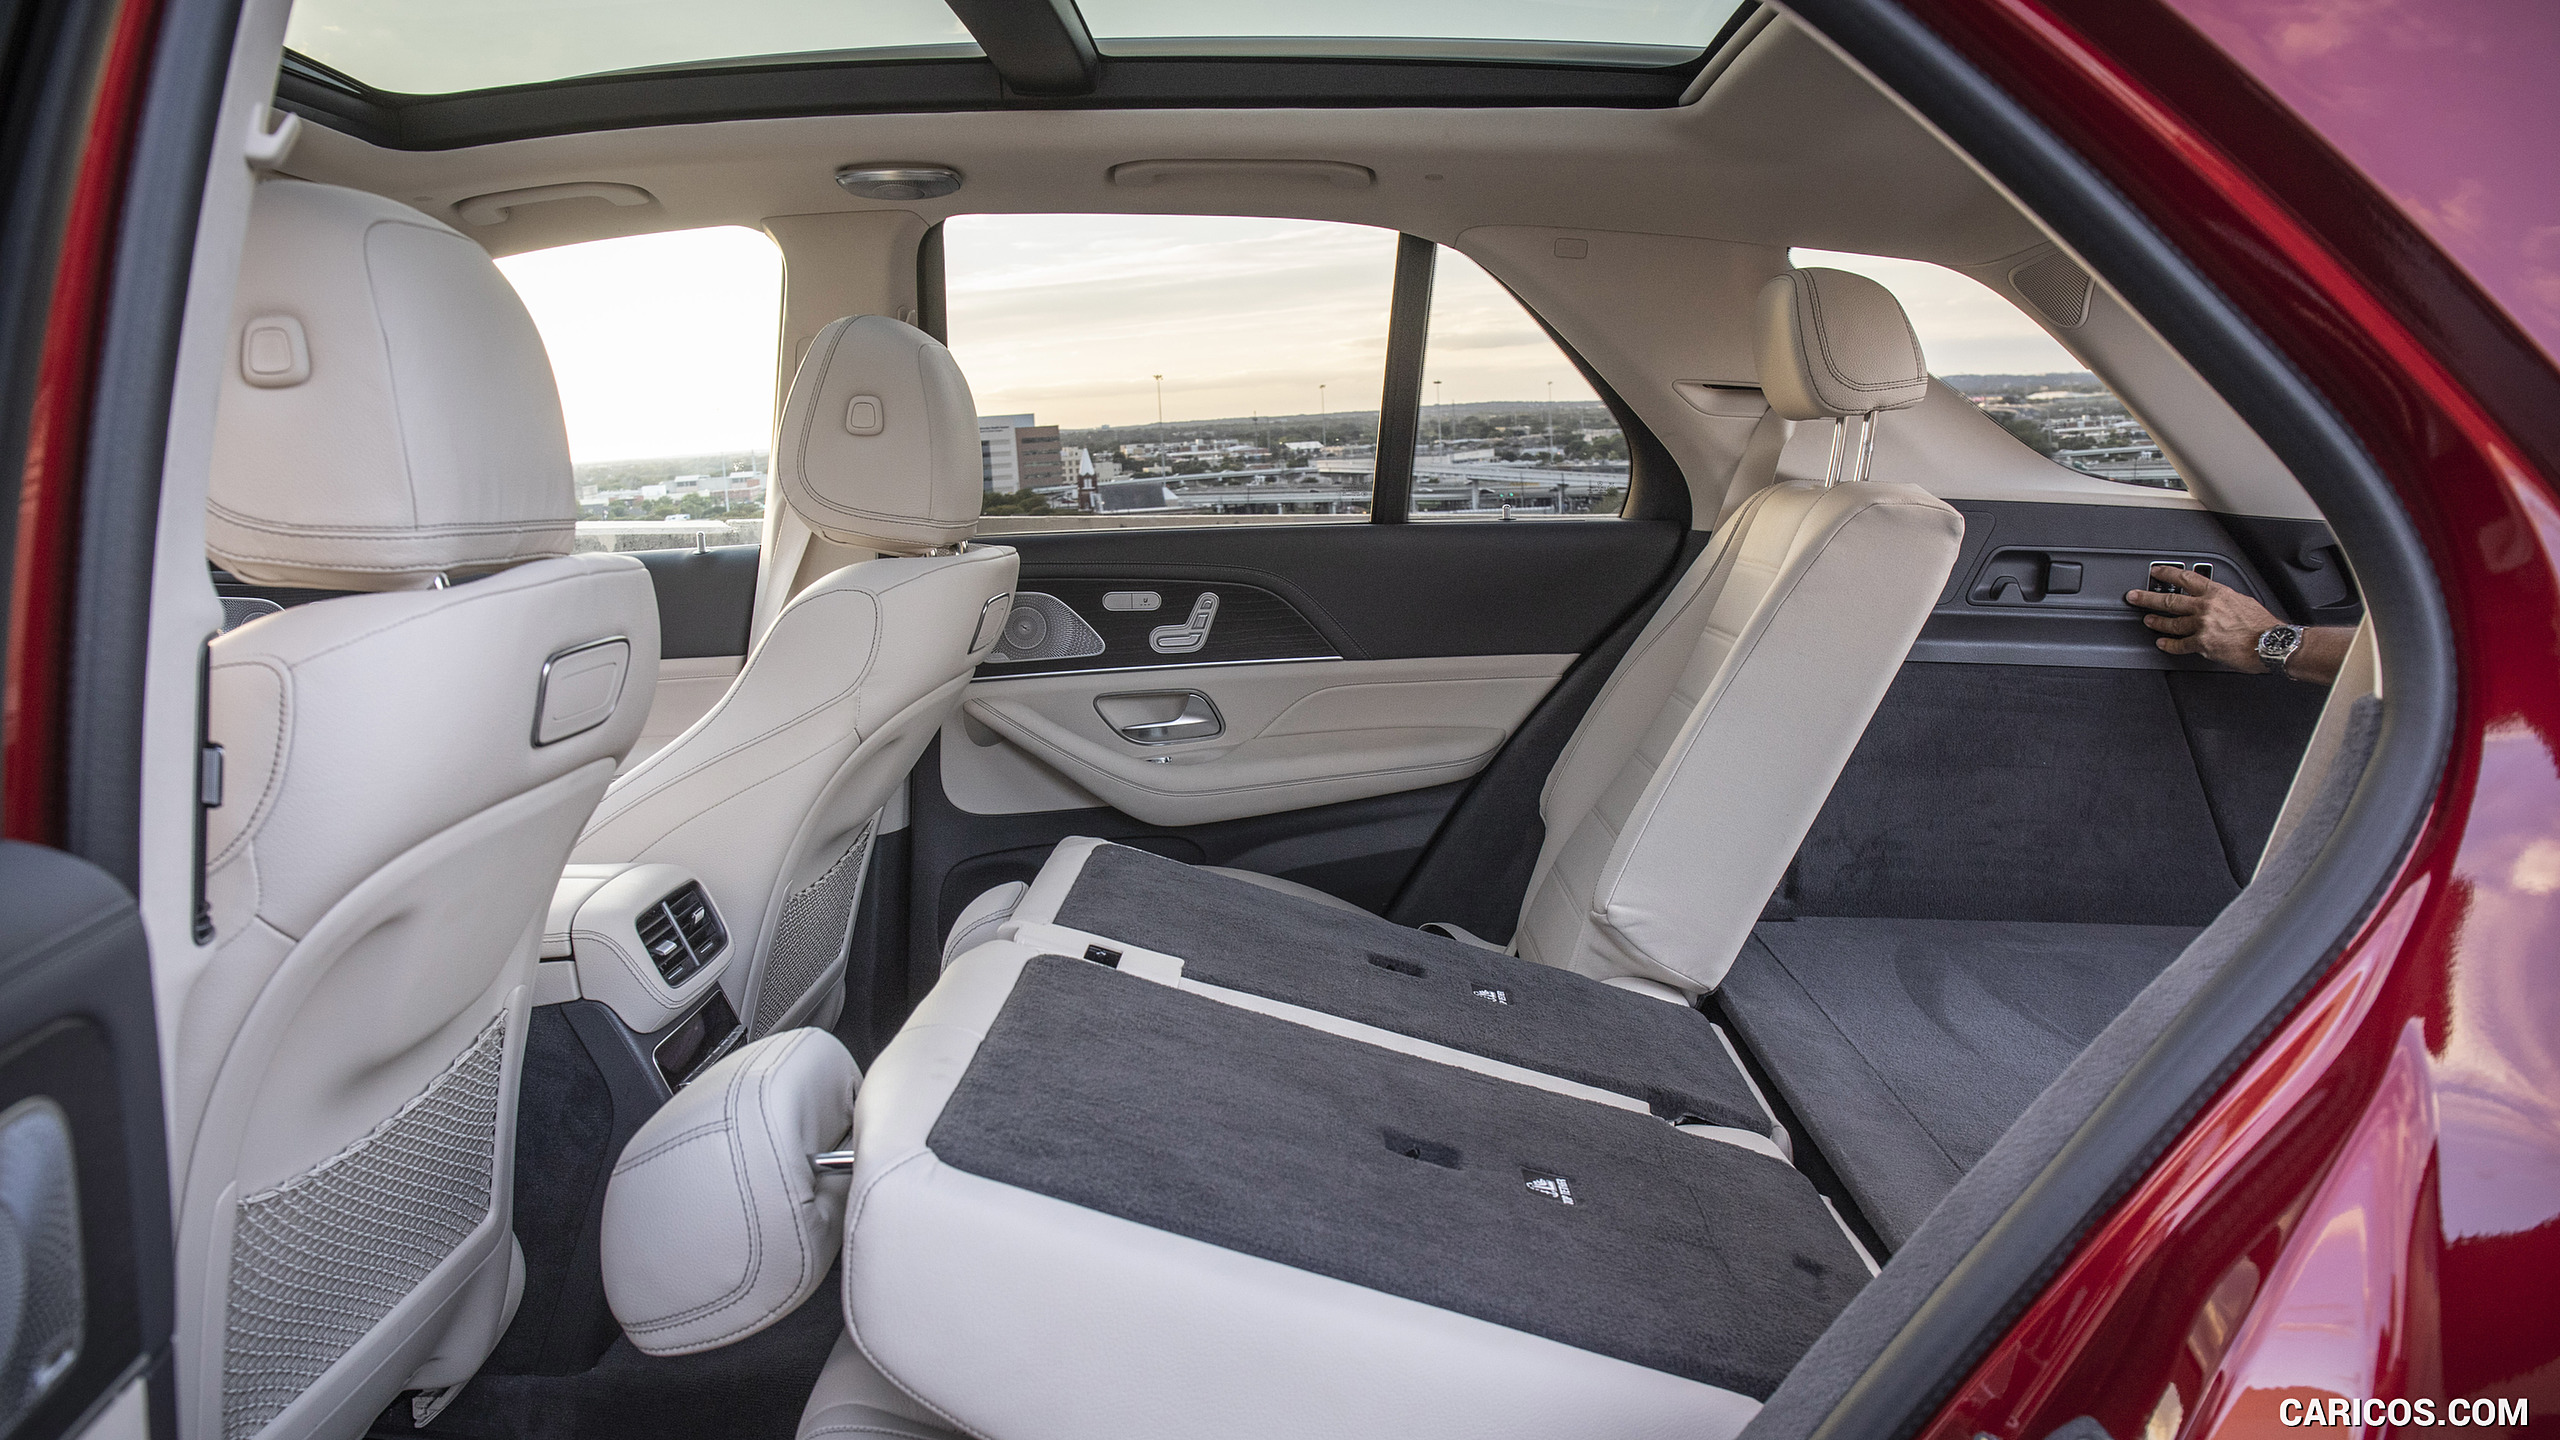 2020 Mercedes-Benz GLE 450 4MATIC (Color: Designo Hyazinth Red Metallic; US-Spec) - Interior, Rear Seats, #337 of 358